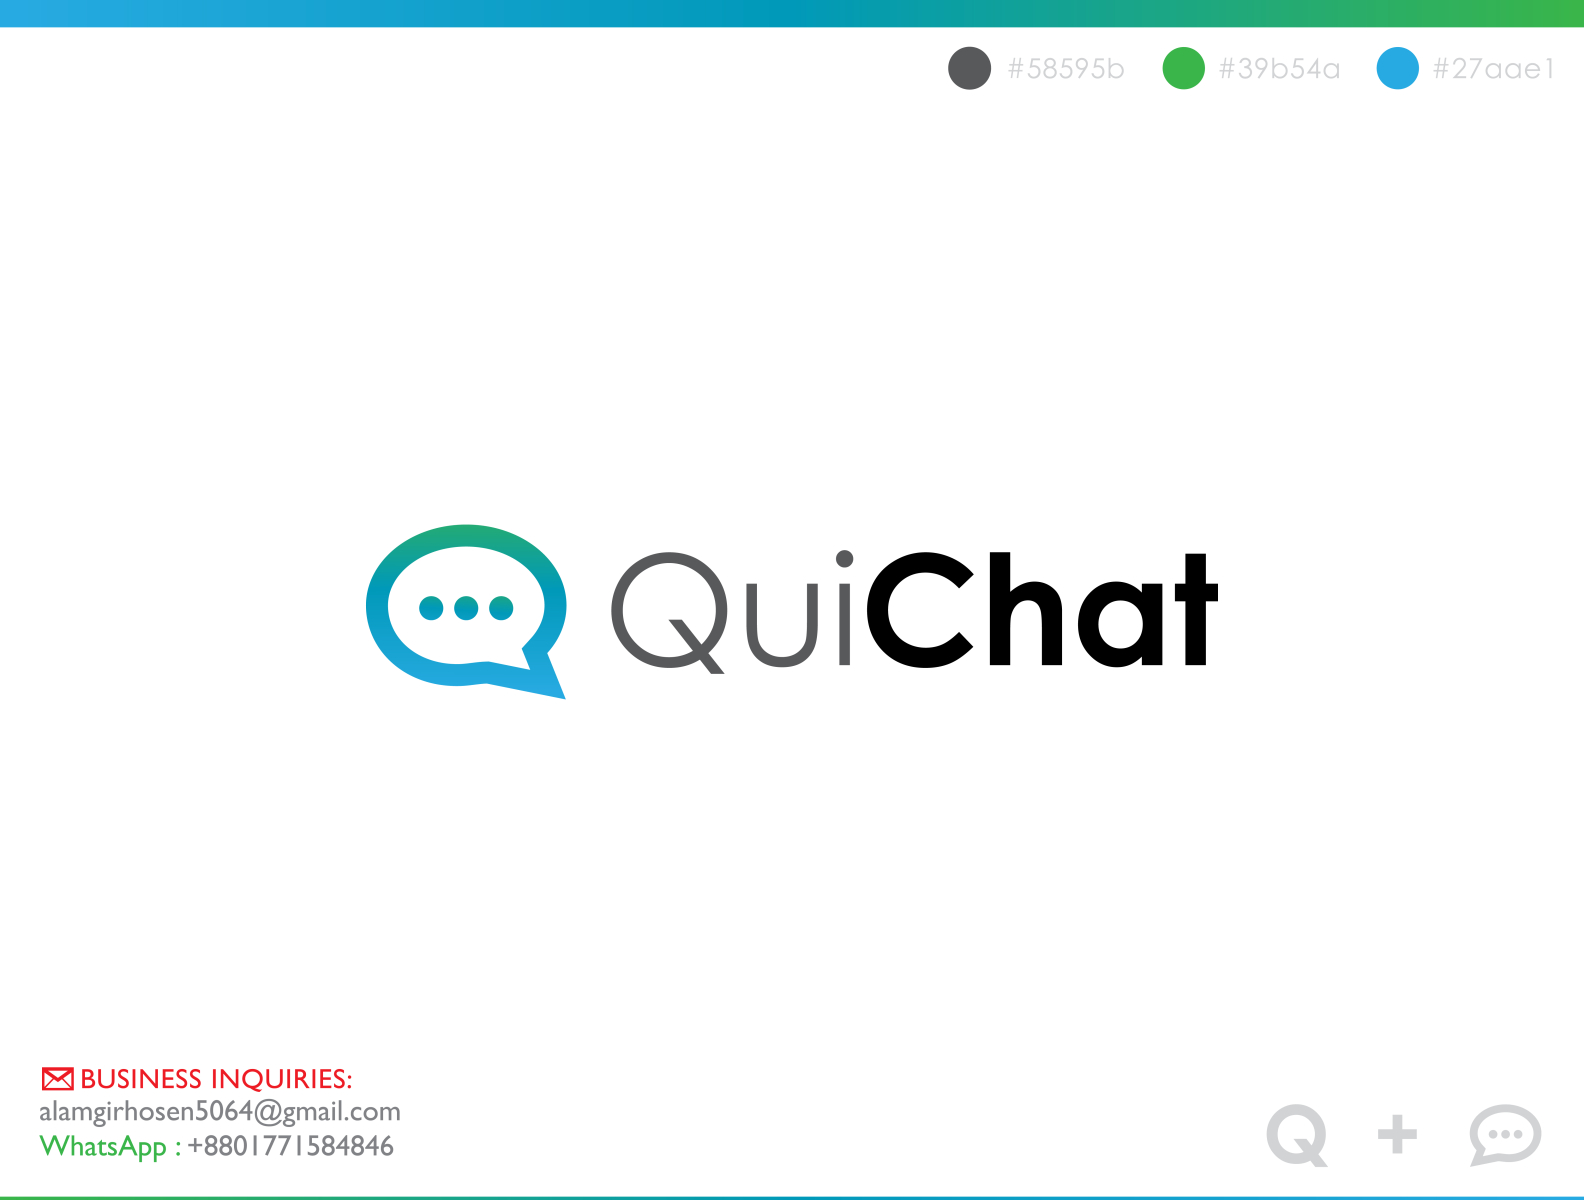 QuiChat App Logo by Alamgir H. | Logo Designer on Dribbble